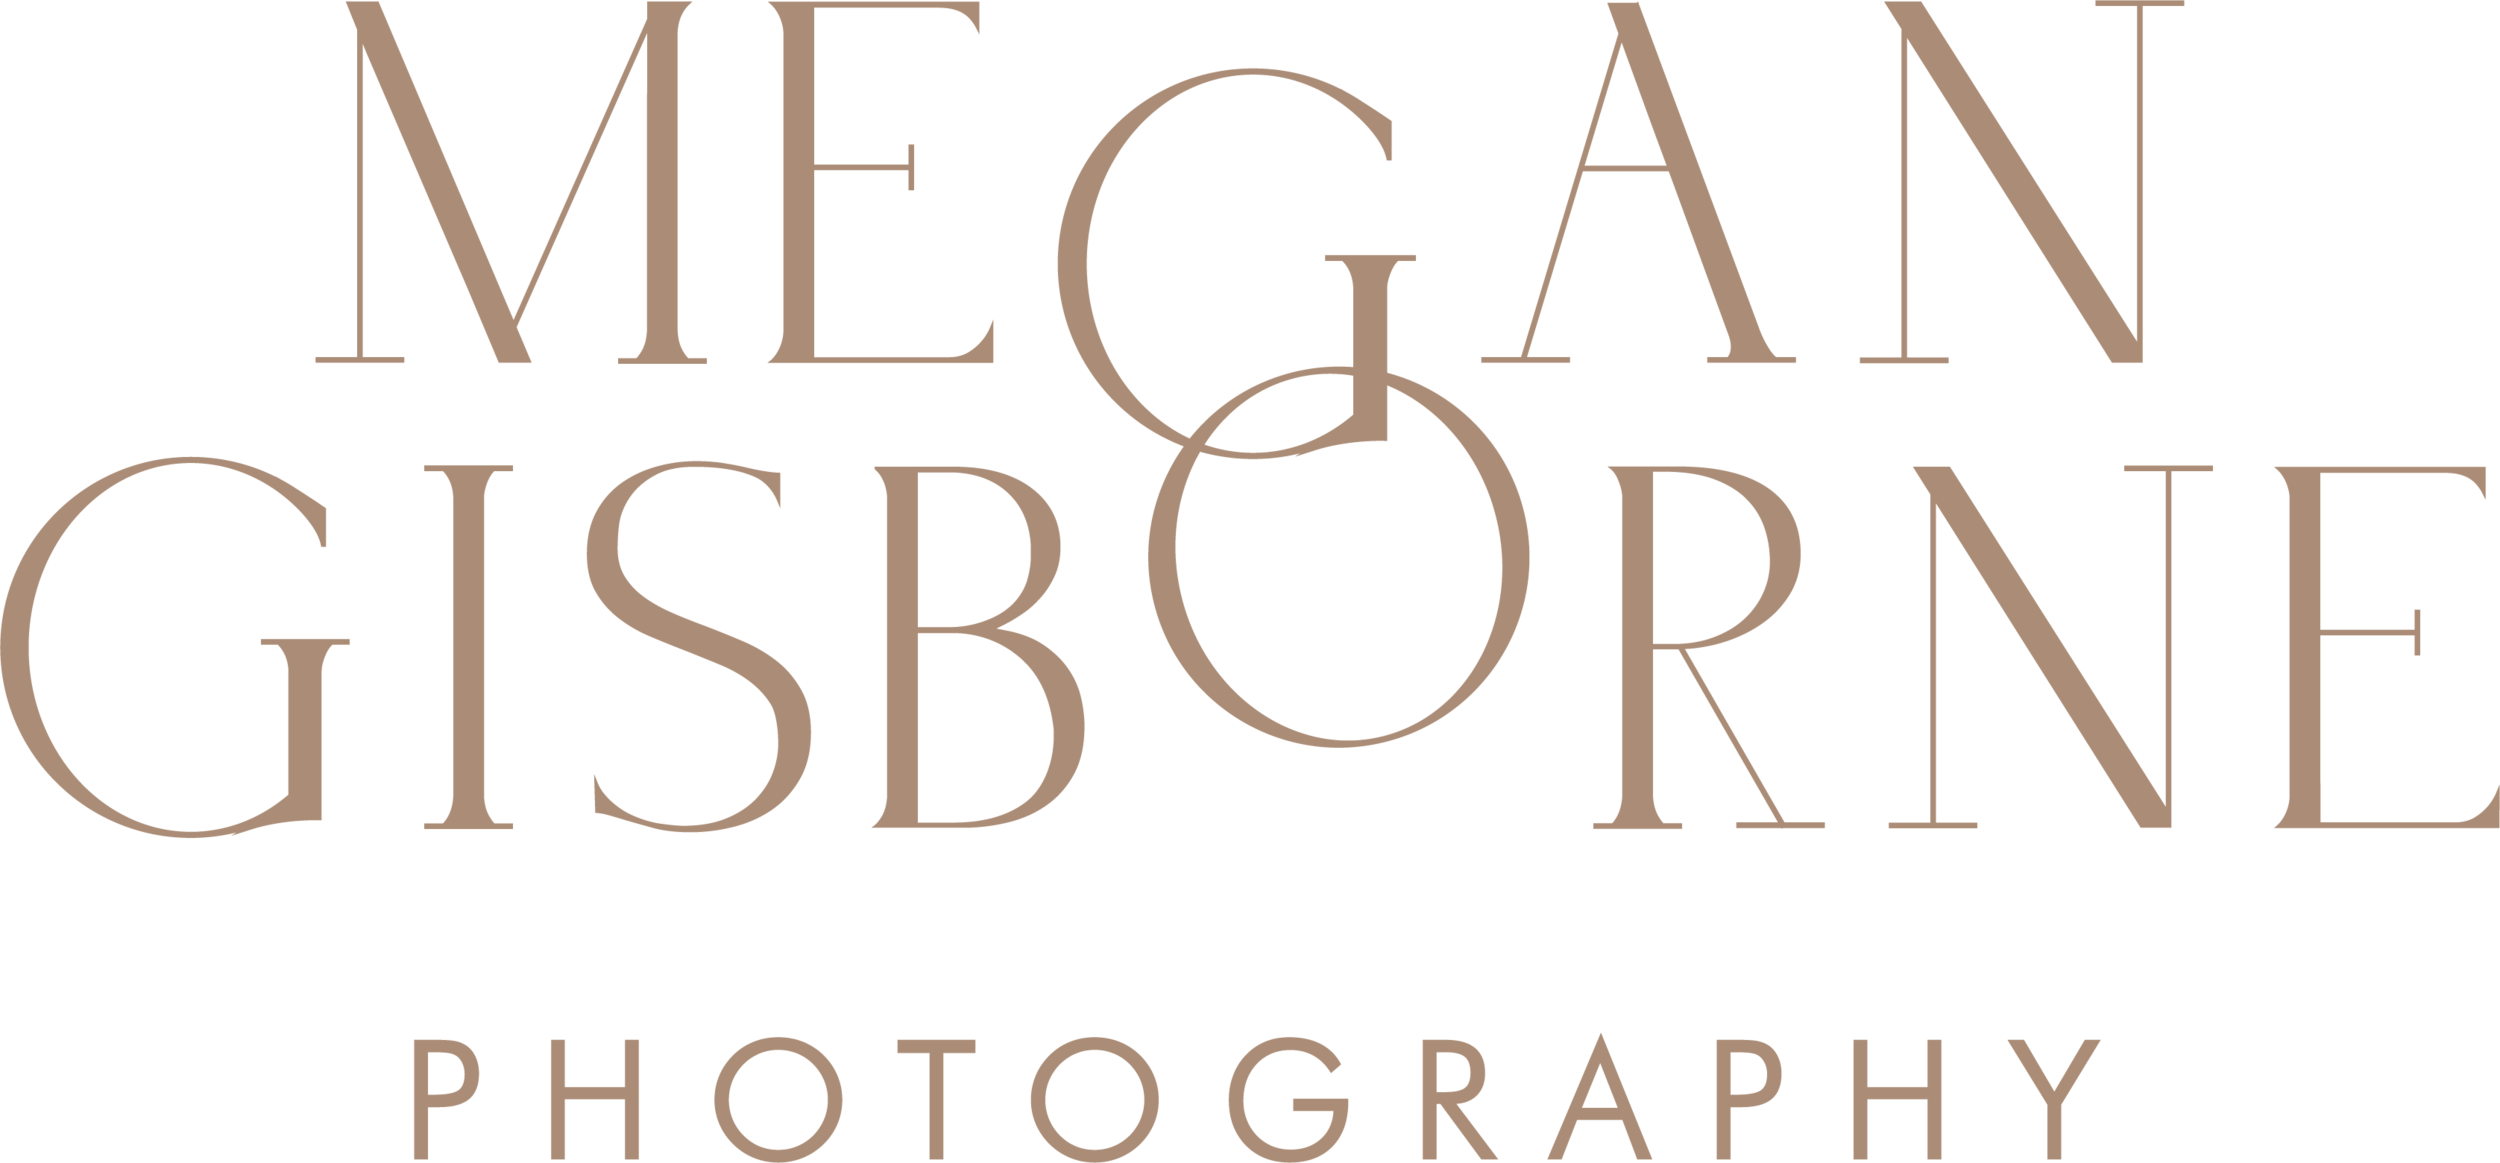 Megan Gisborne Photography - Personal Branding Photographer